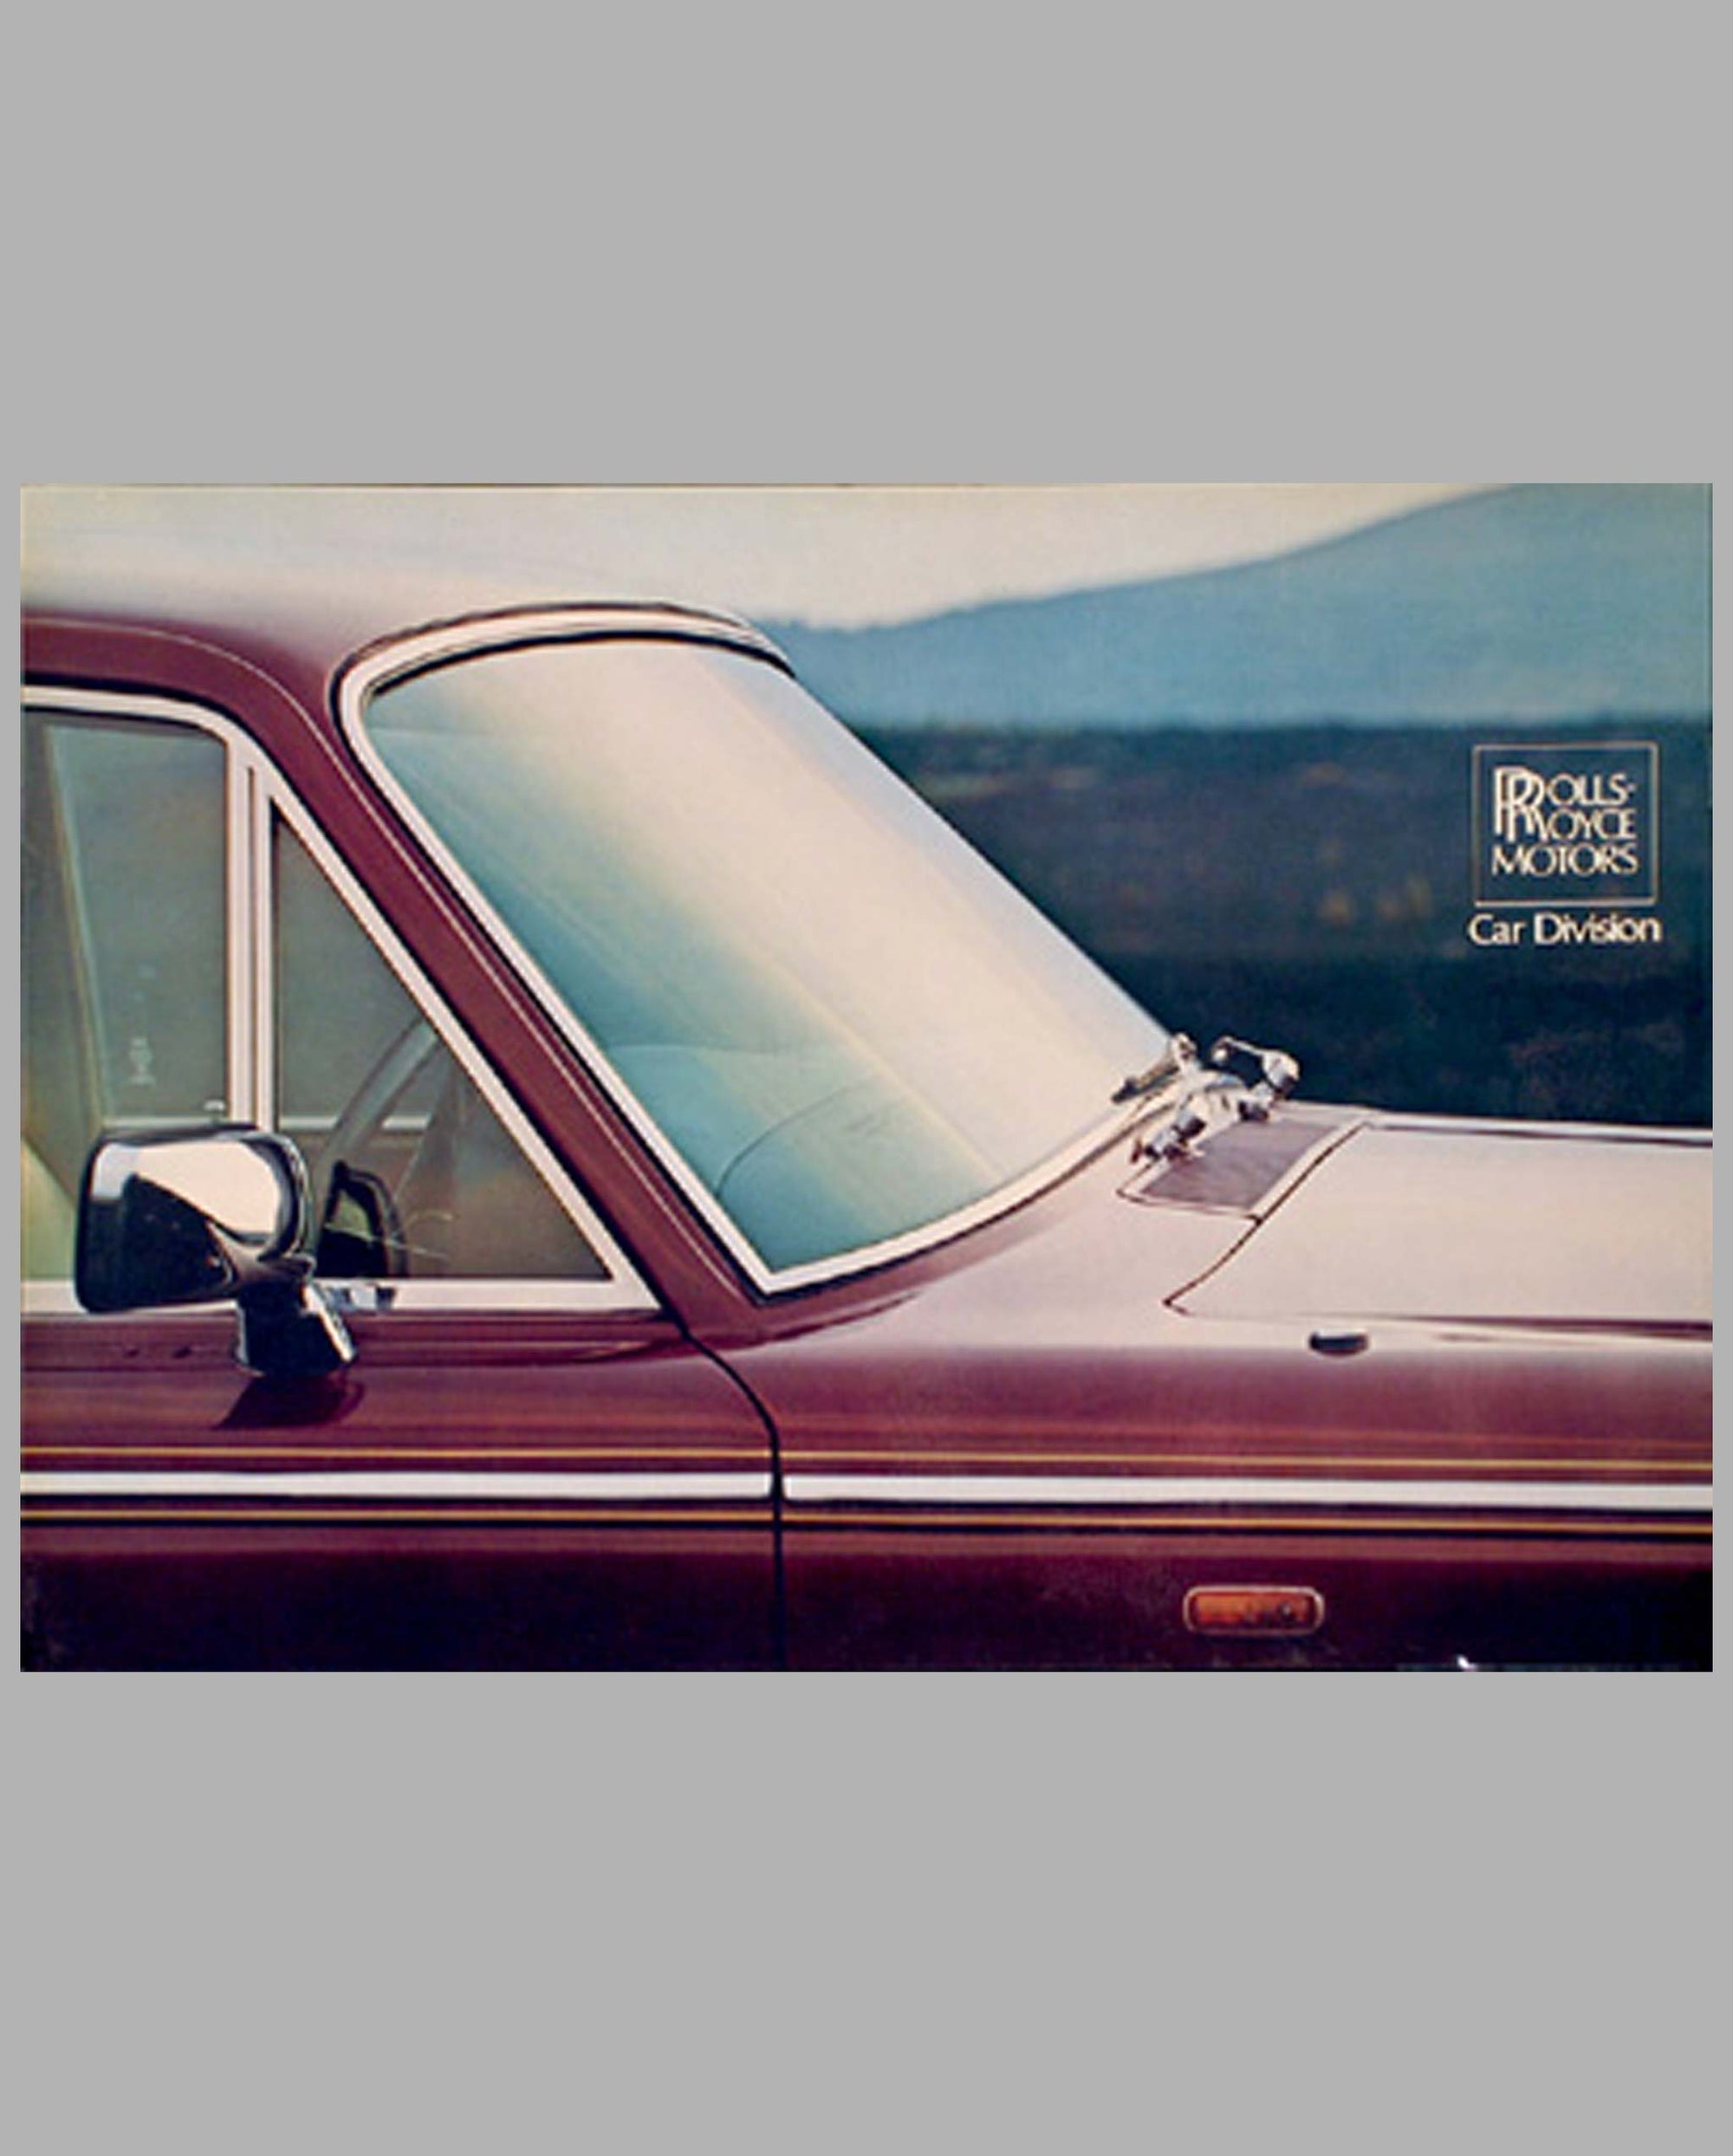 1977 Rolls-Royce Silver Shadow II prestige color catalog